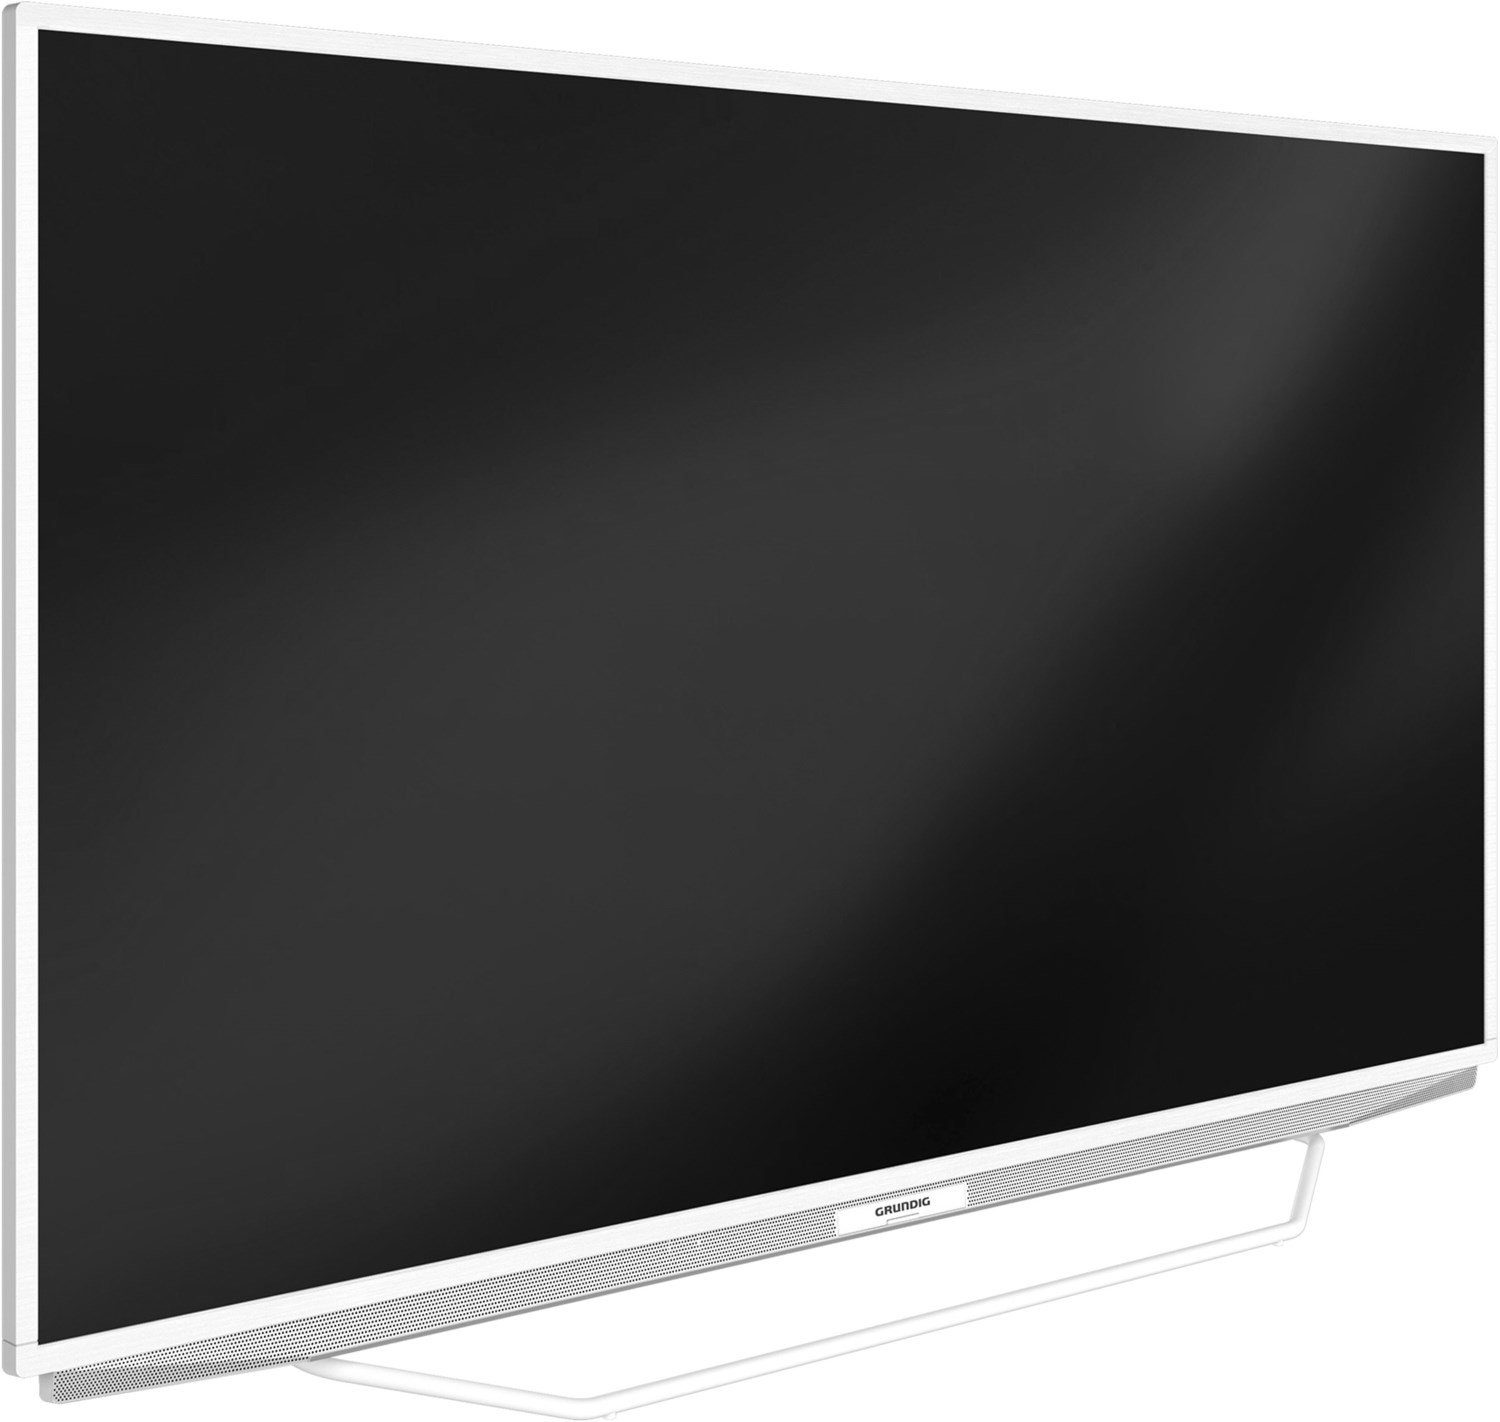 Grundig 43 GUW 7170 LCD-LED Fernseher (109 cm/43 Zoll, Ultra HD 4k, Smart  TV)